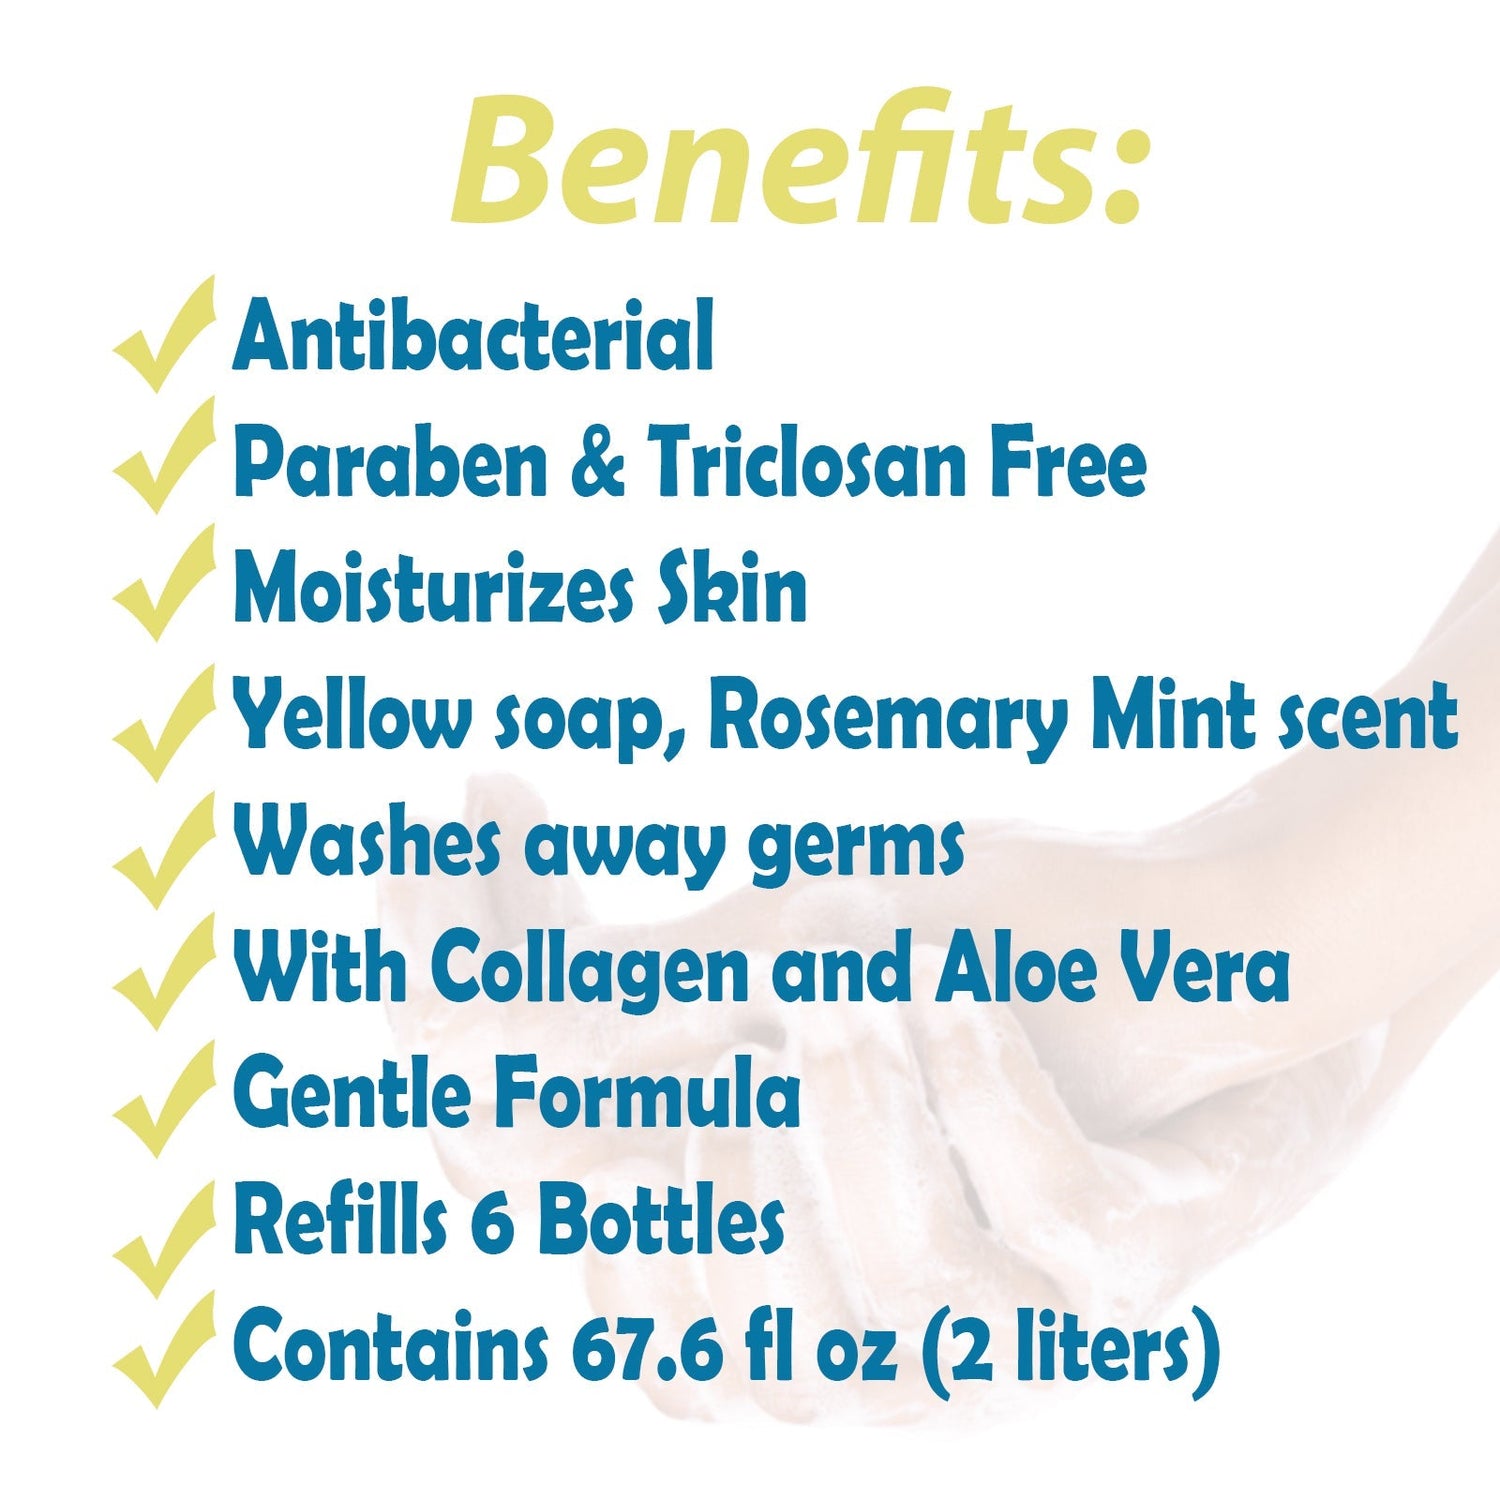 (Pack 4) Beauty Soft Liquid Hand Soap Refill, Rosemary Mint, 256 oz - USA Medical Supply